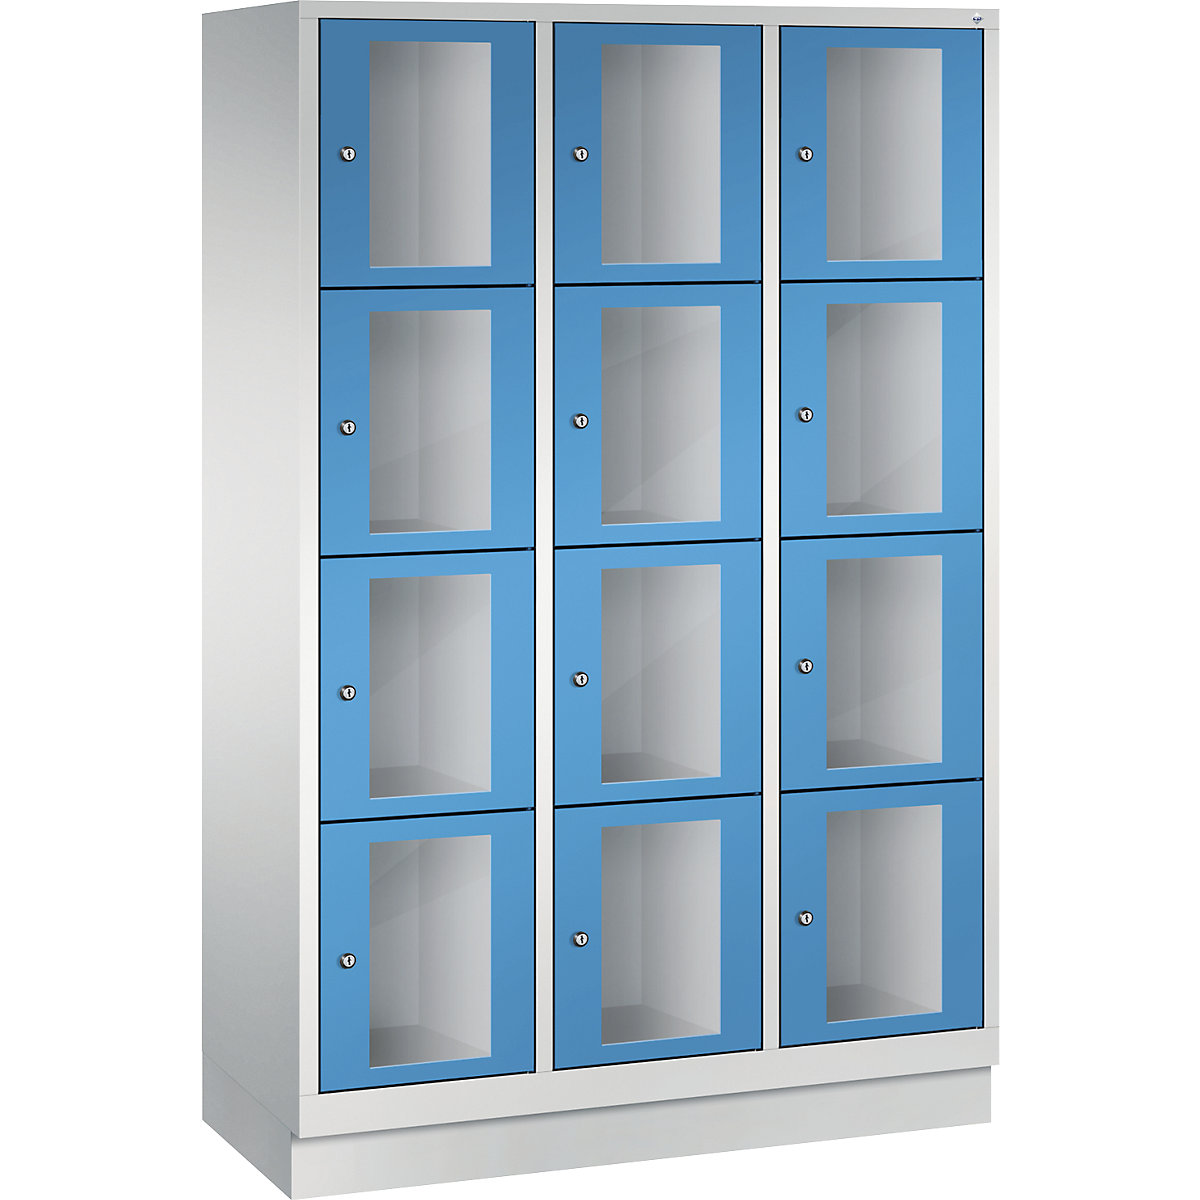 C+P – Armario de compartimentos CLASSIC, altura de compartimento 375 mm, con zócalo, 12 compartimentos, 1200 mm de anchura, puerta en azul luminoso